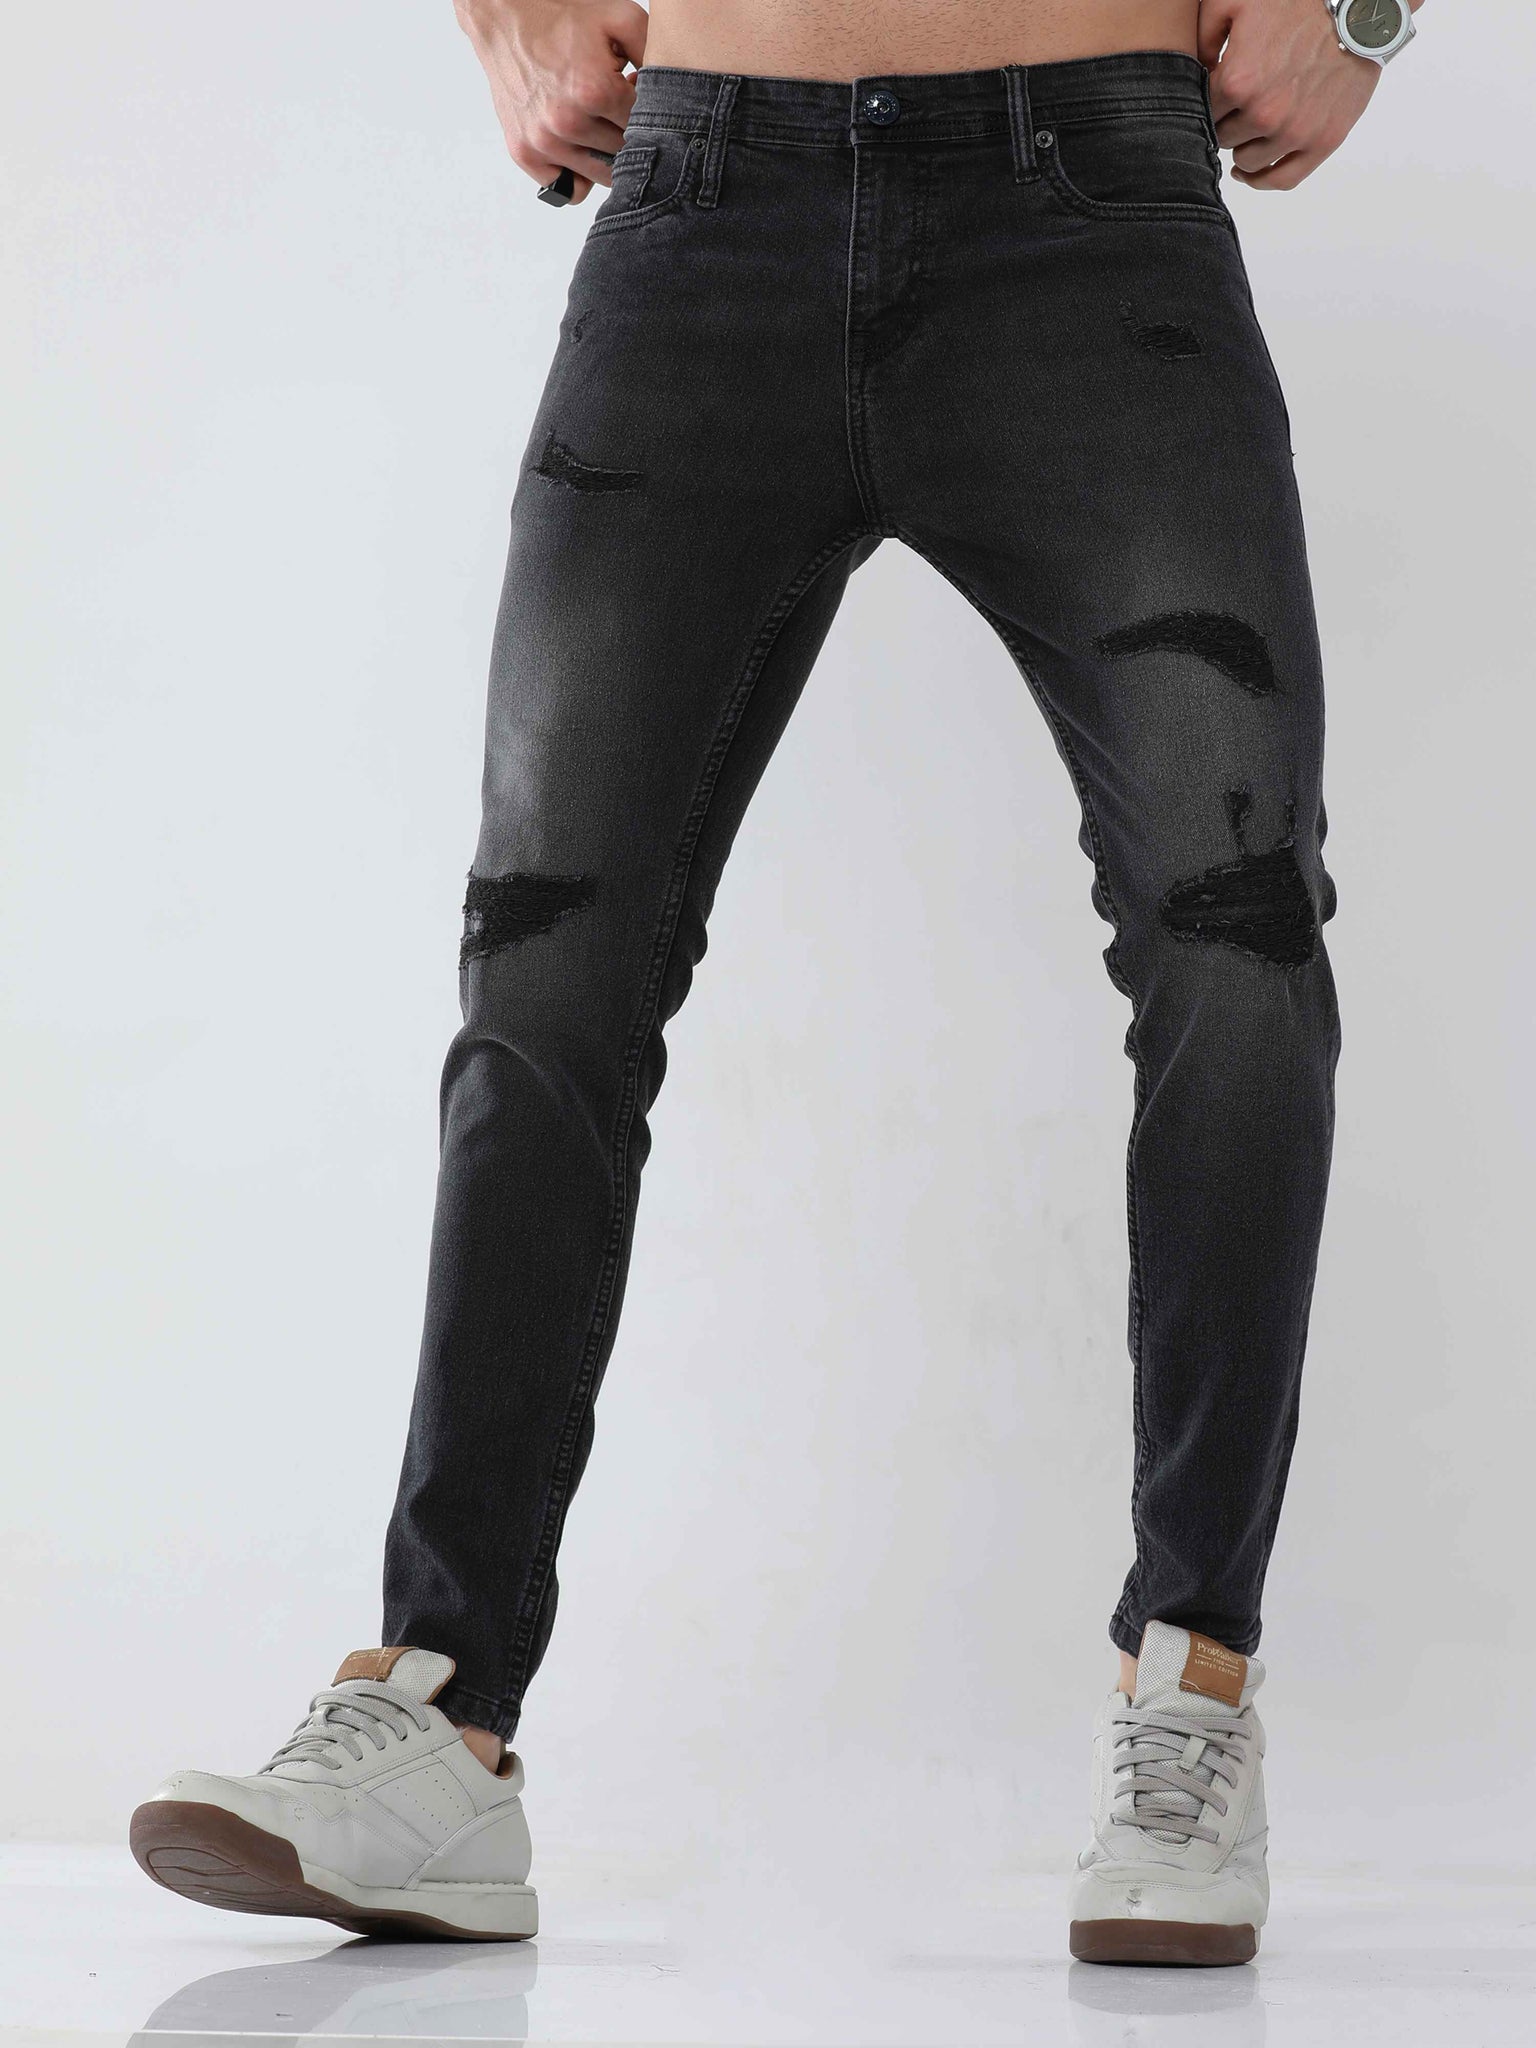 Onyx Black Jeans